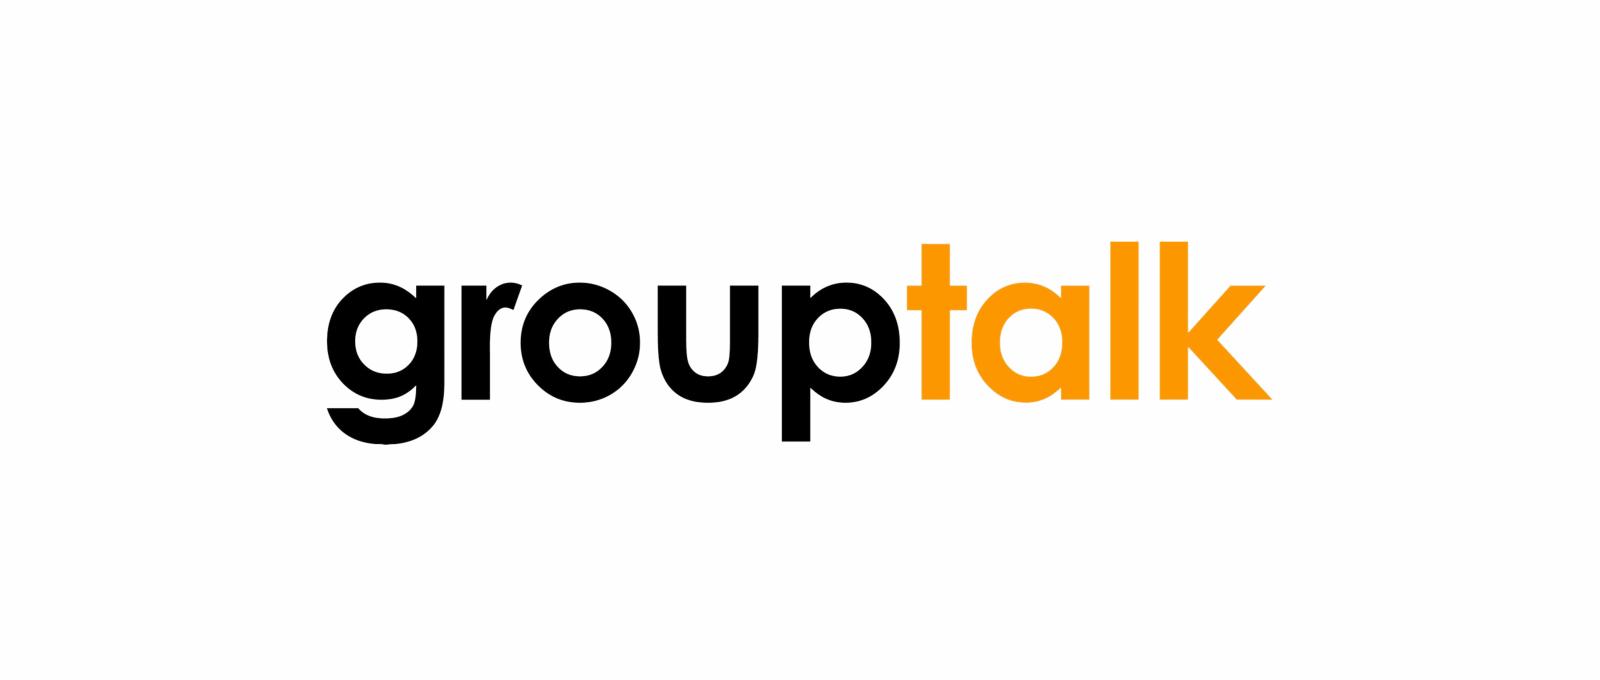 GroupTalk logga